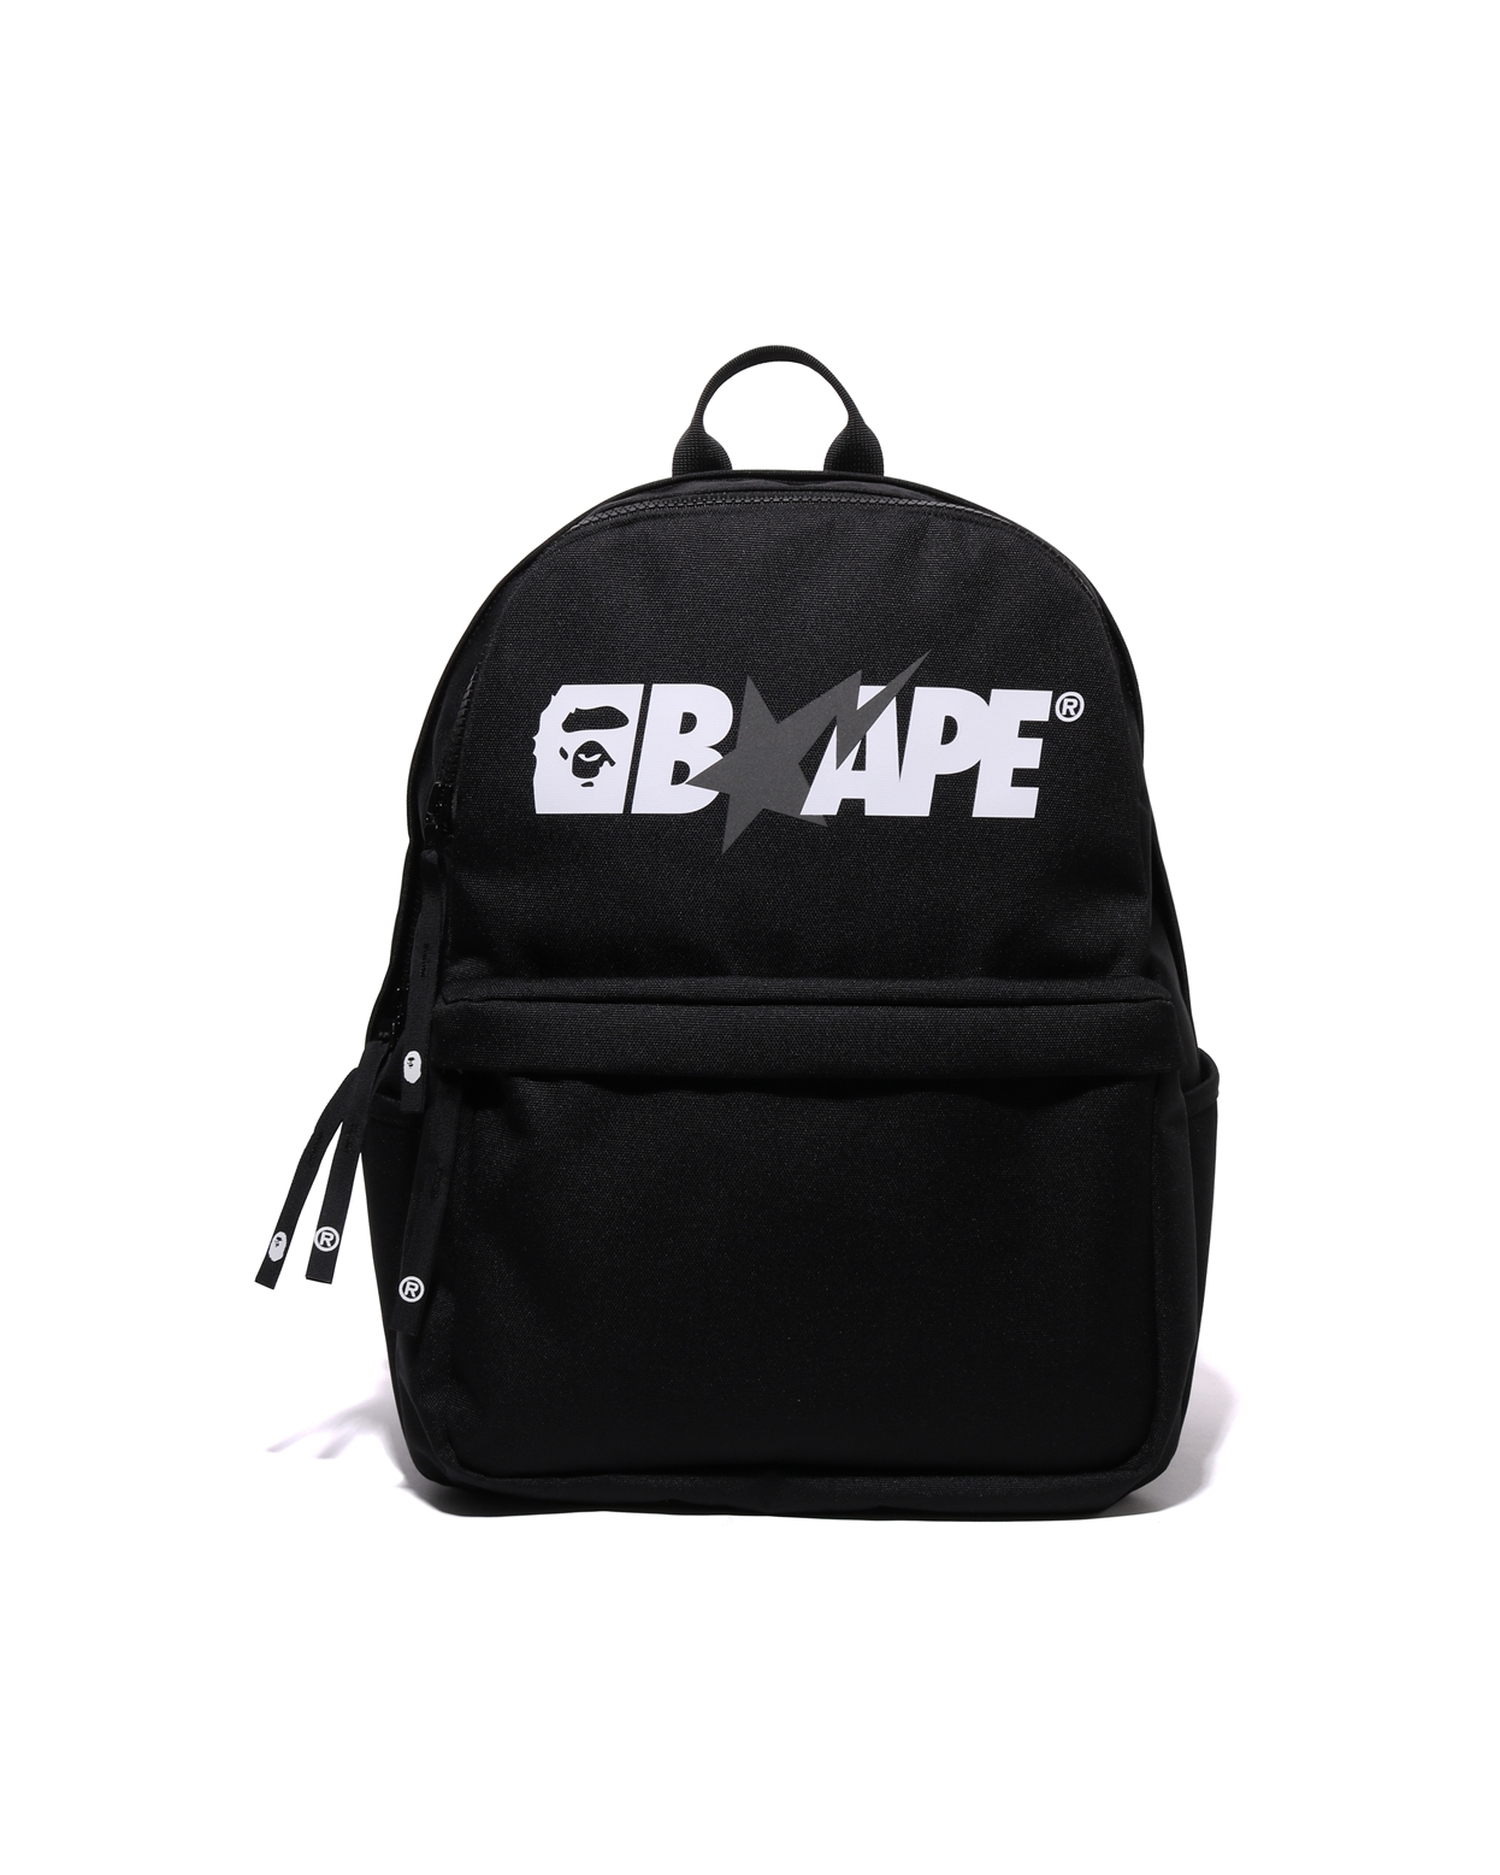 bape backpack white